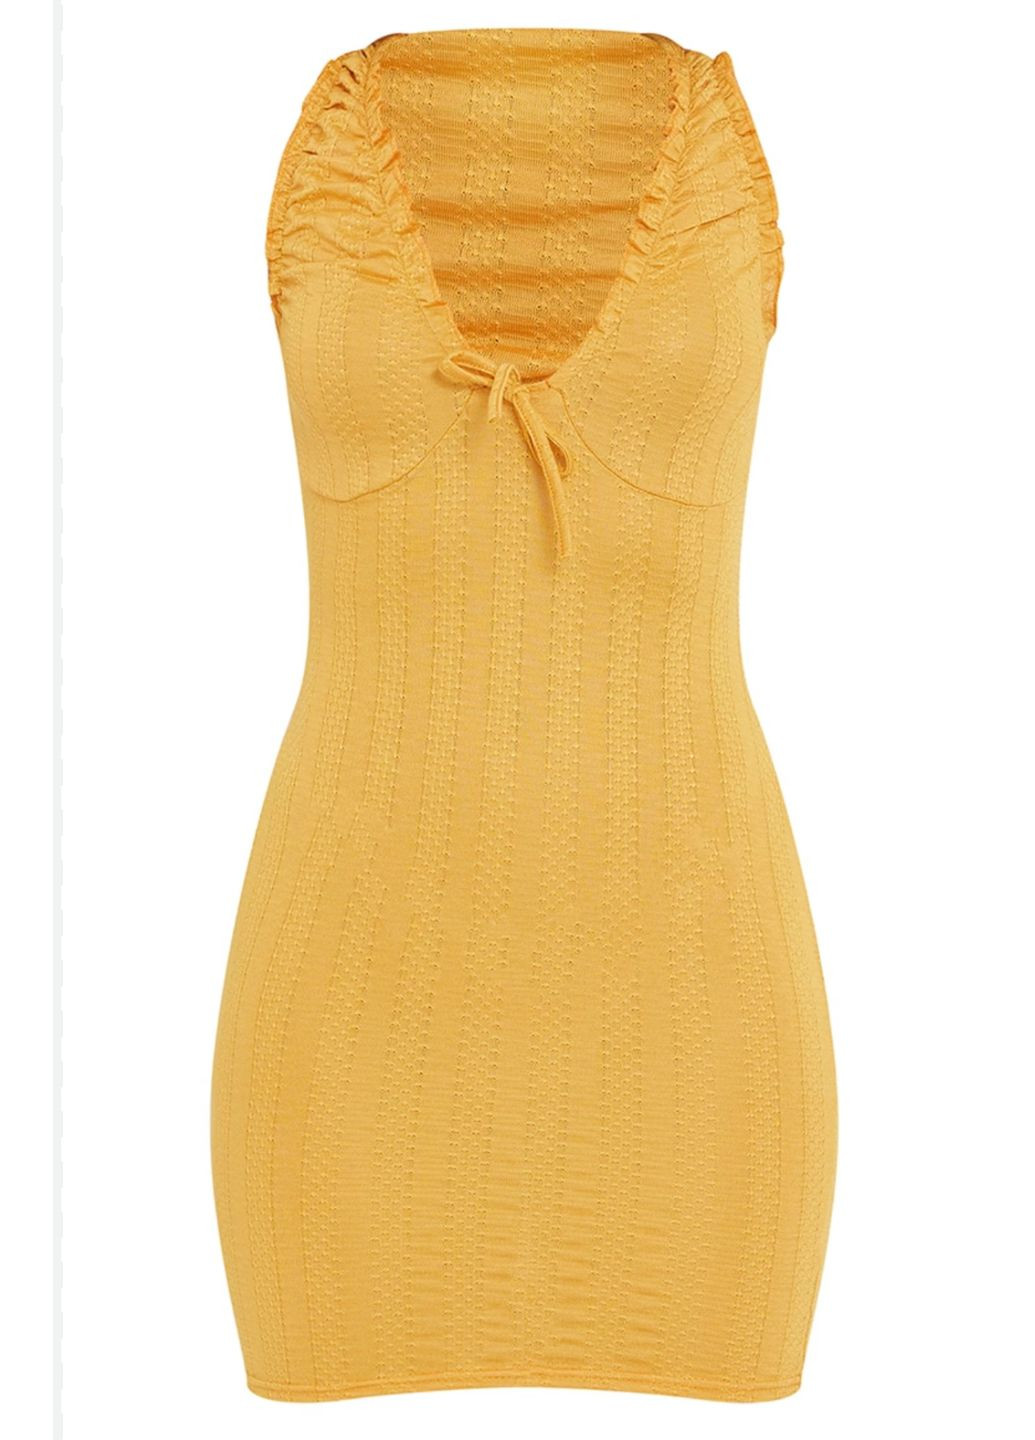 Желтое платье желтое btg-0073 PrettyLittleThing